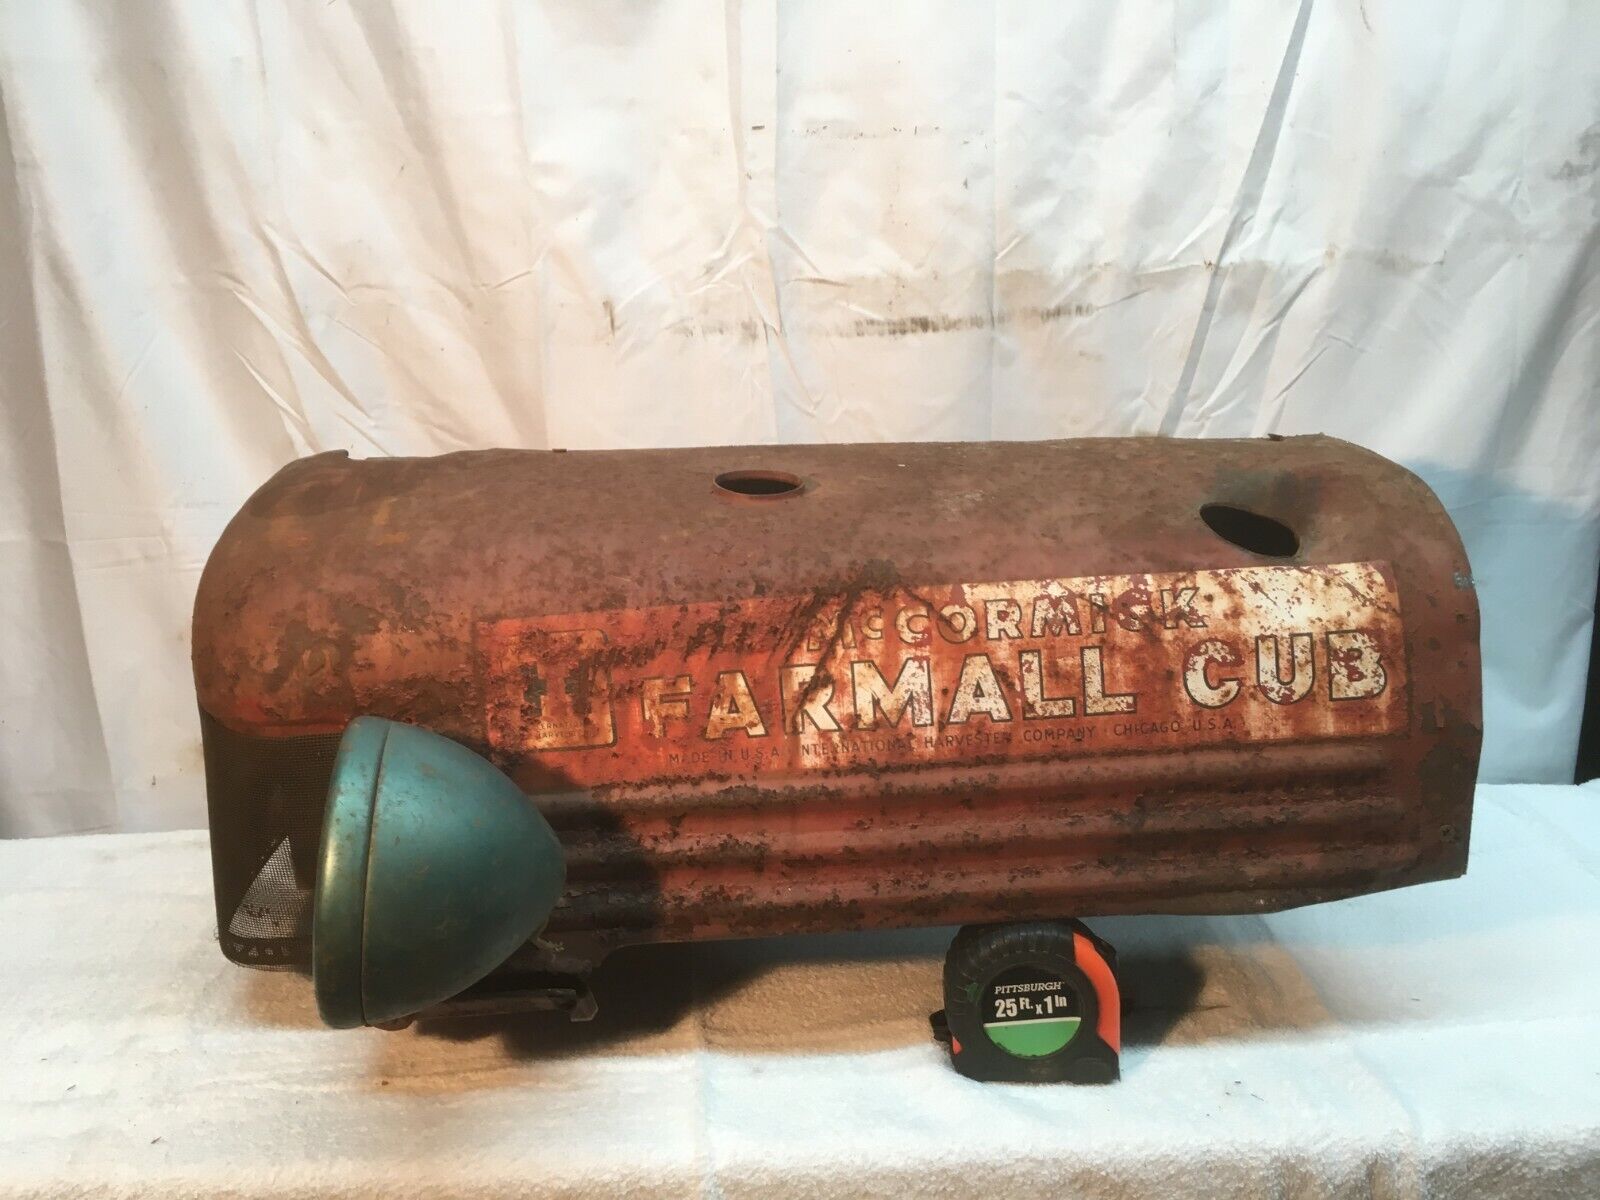  IHC Farmall CUB  Tractor Grille Hot Rat Rod Man Cave Art Wireless Speaker Cover